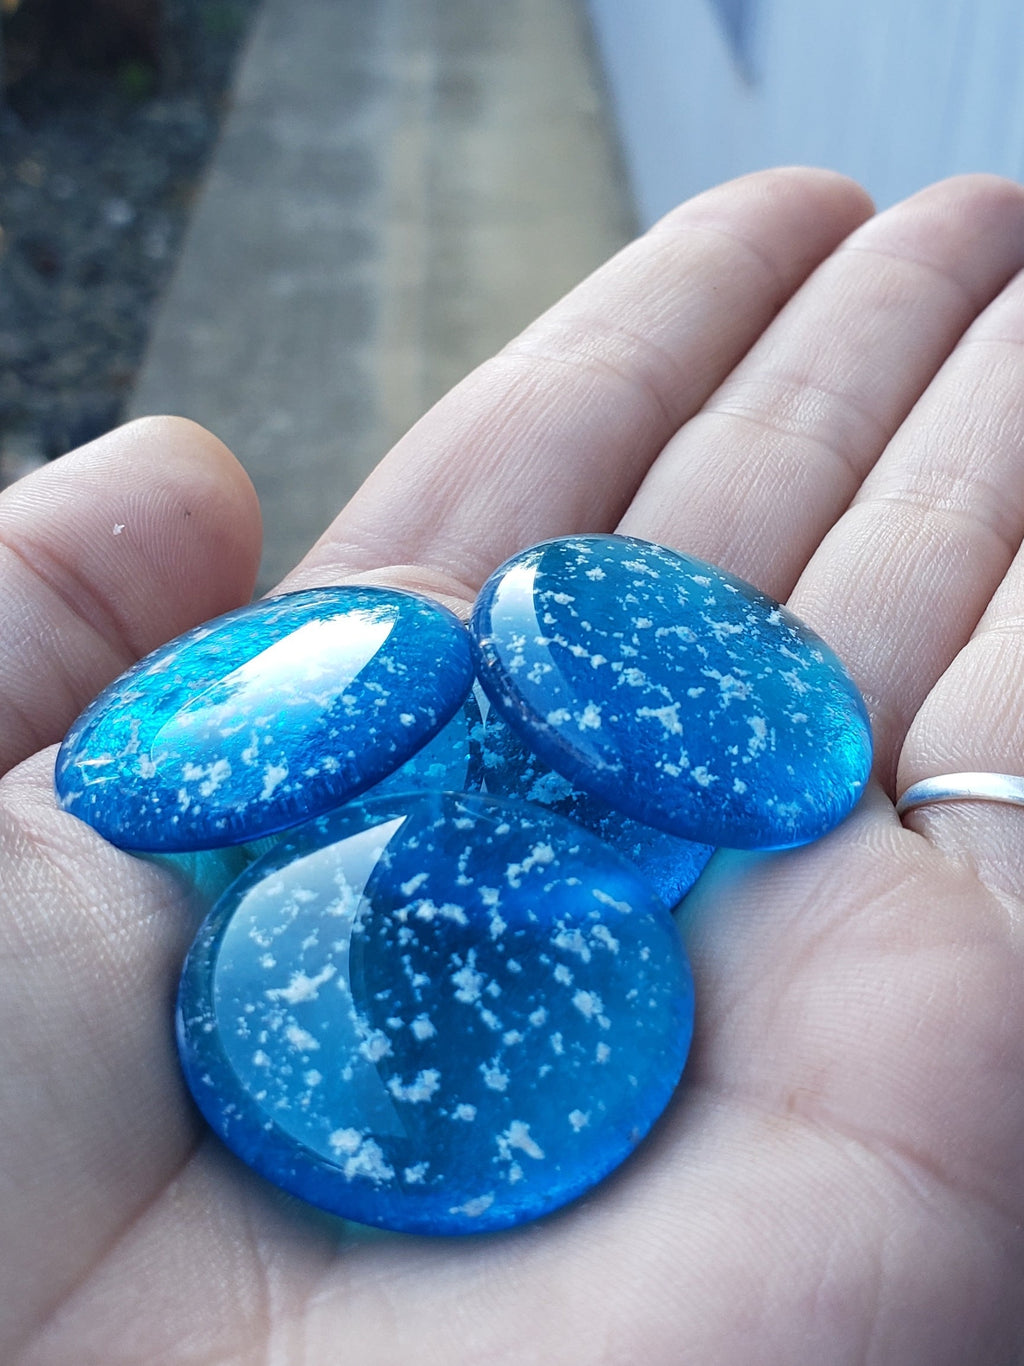 Dragonfly Cremation Pocket Stones 4 (set) Ashes InFused Glass 1 inch stones in Velvet Bag